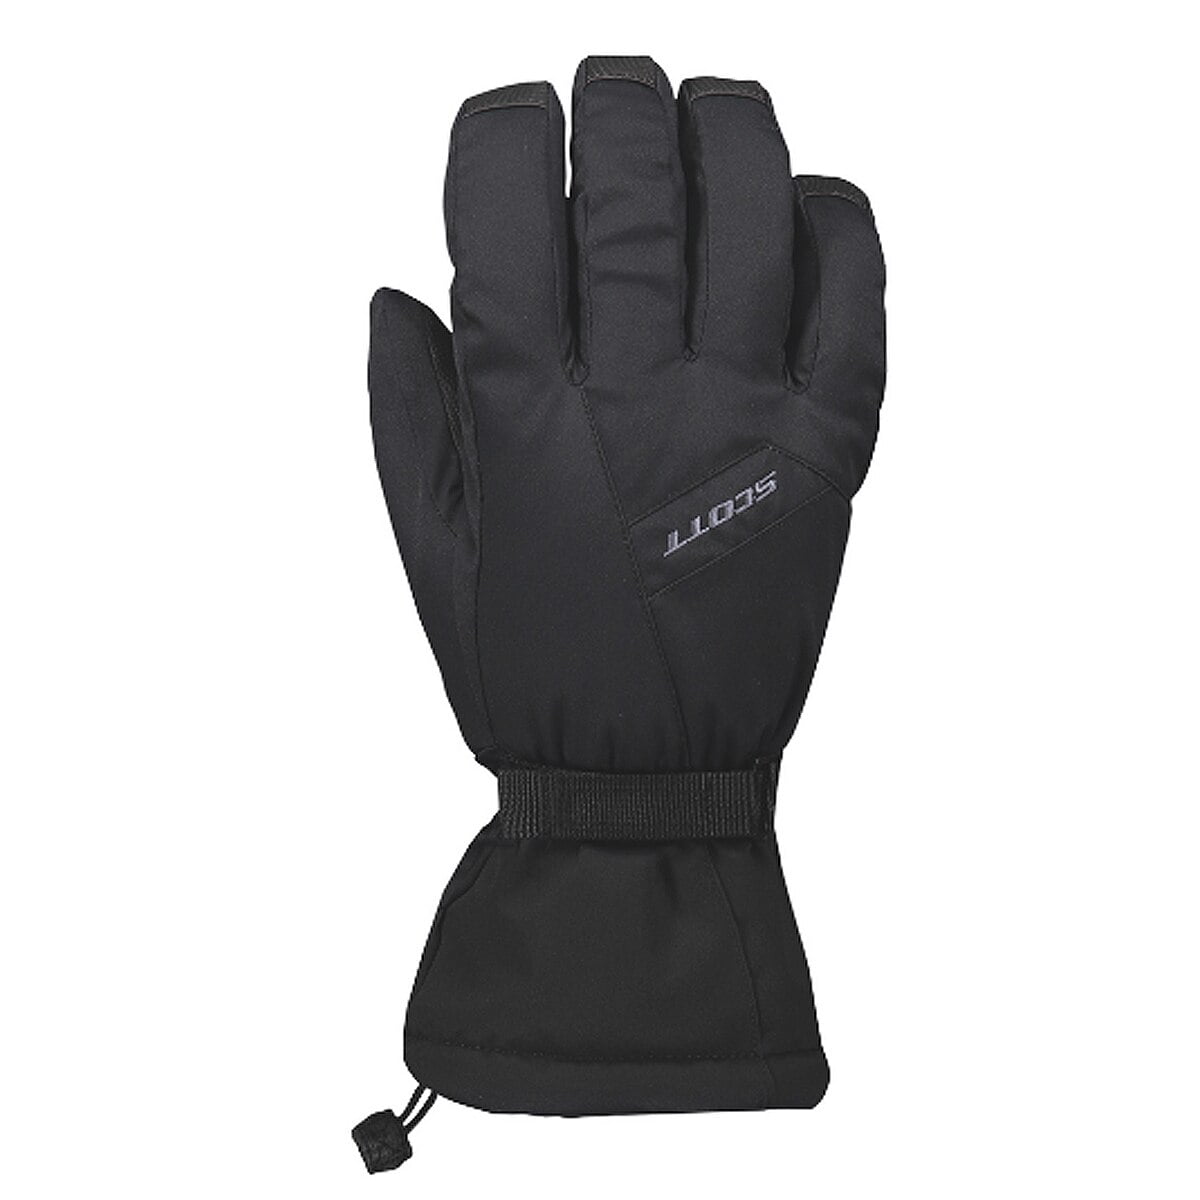 Black Scott Ultimate Warm Unisex Ski / Snowboarding Gloves NEW Lists @ $40 